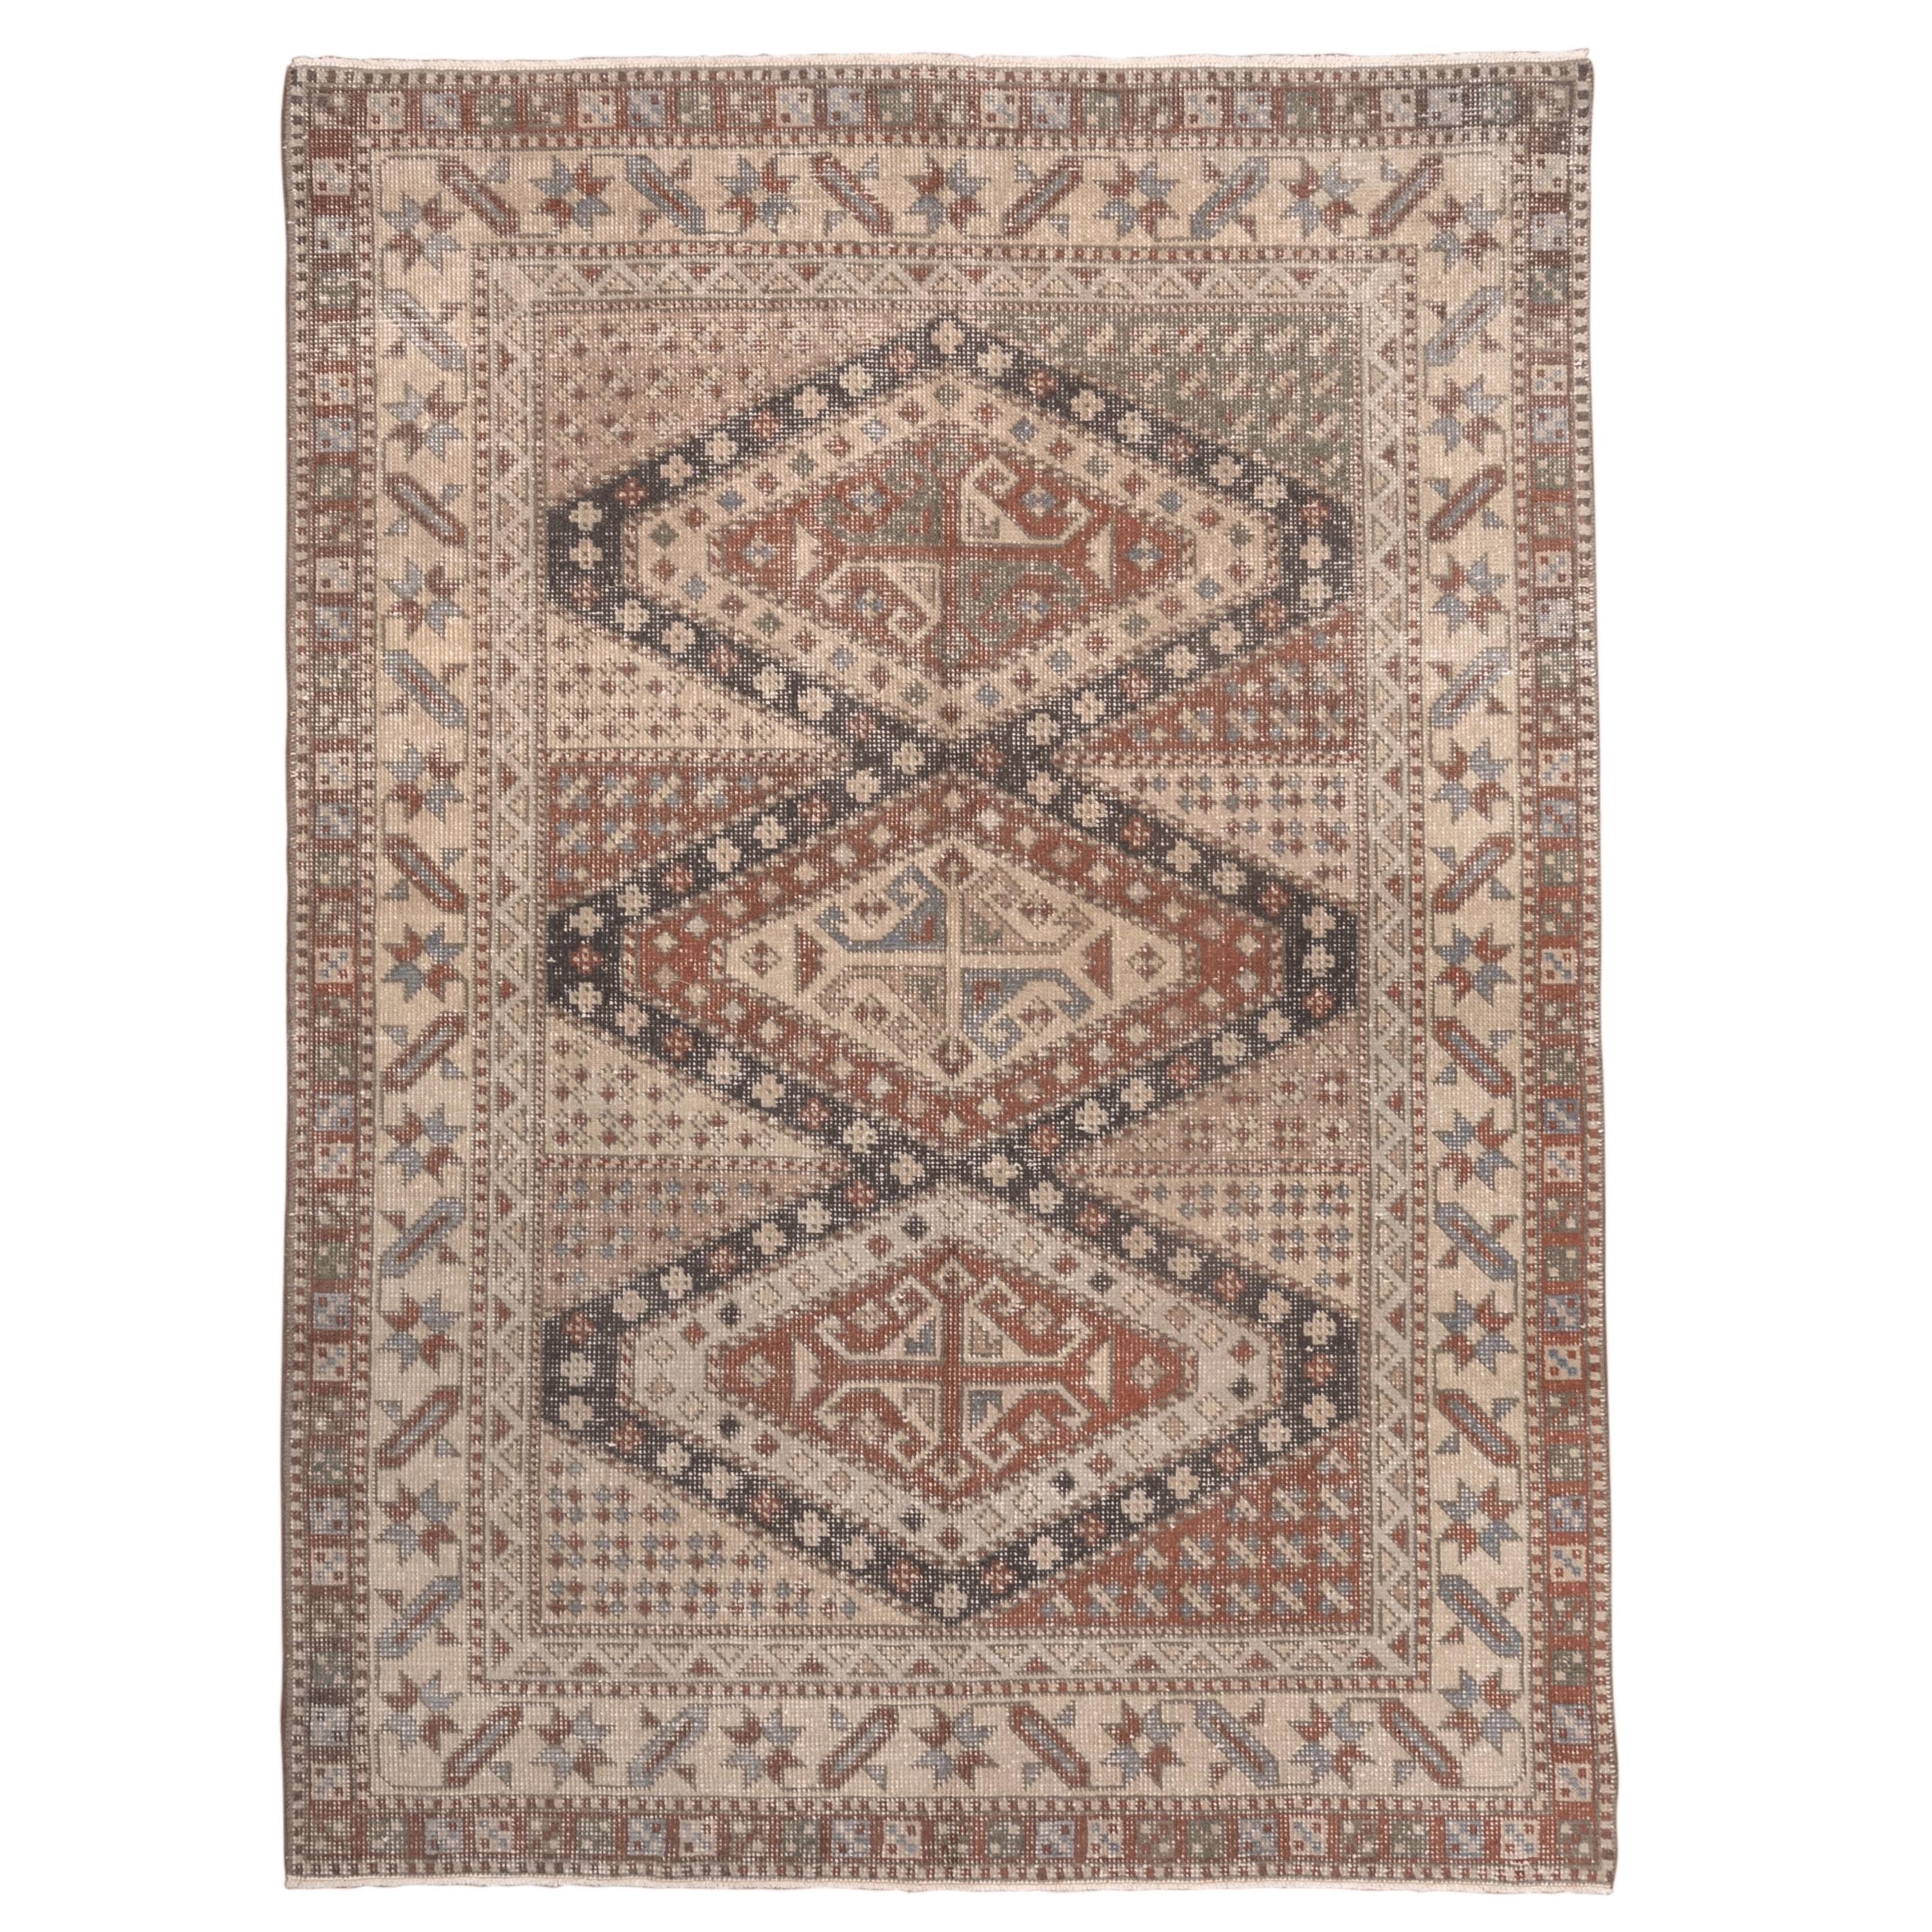 Vintage Tribal Turkish Sparta Carpet Geometric Design, Brown, Ivory & Blue Tones